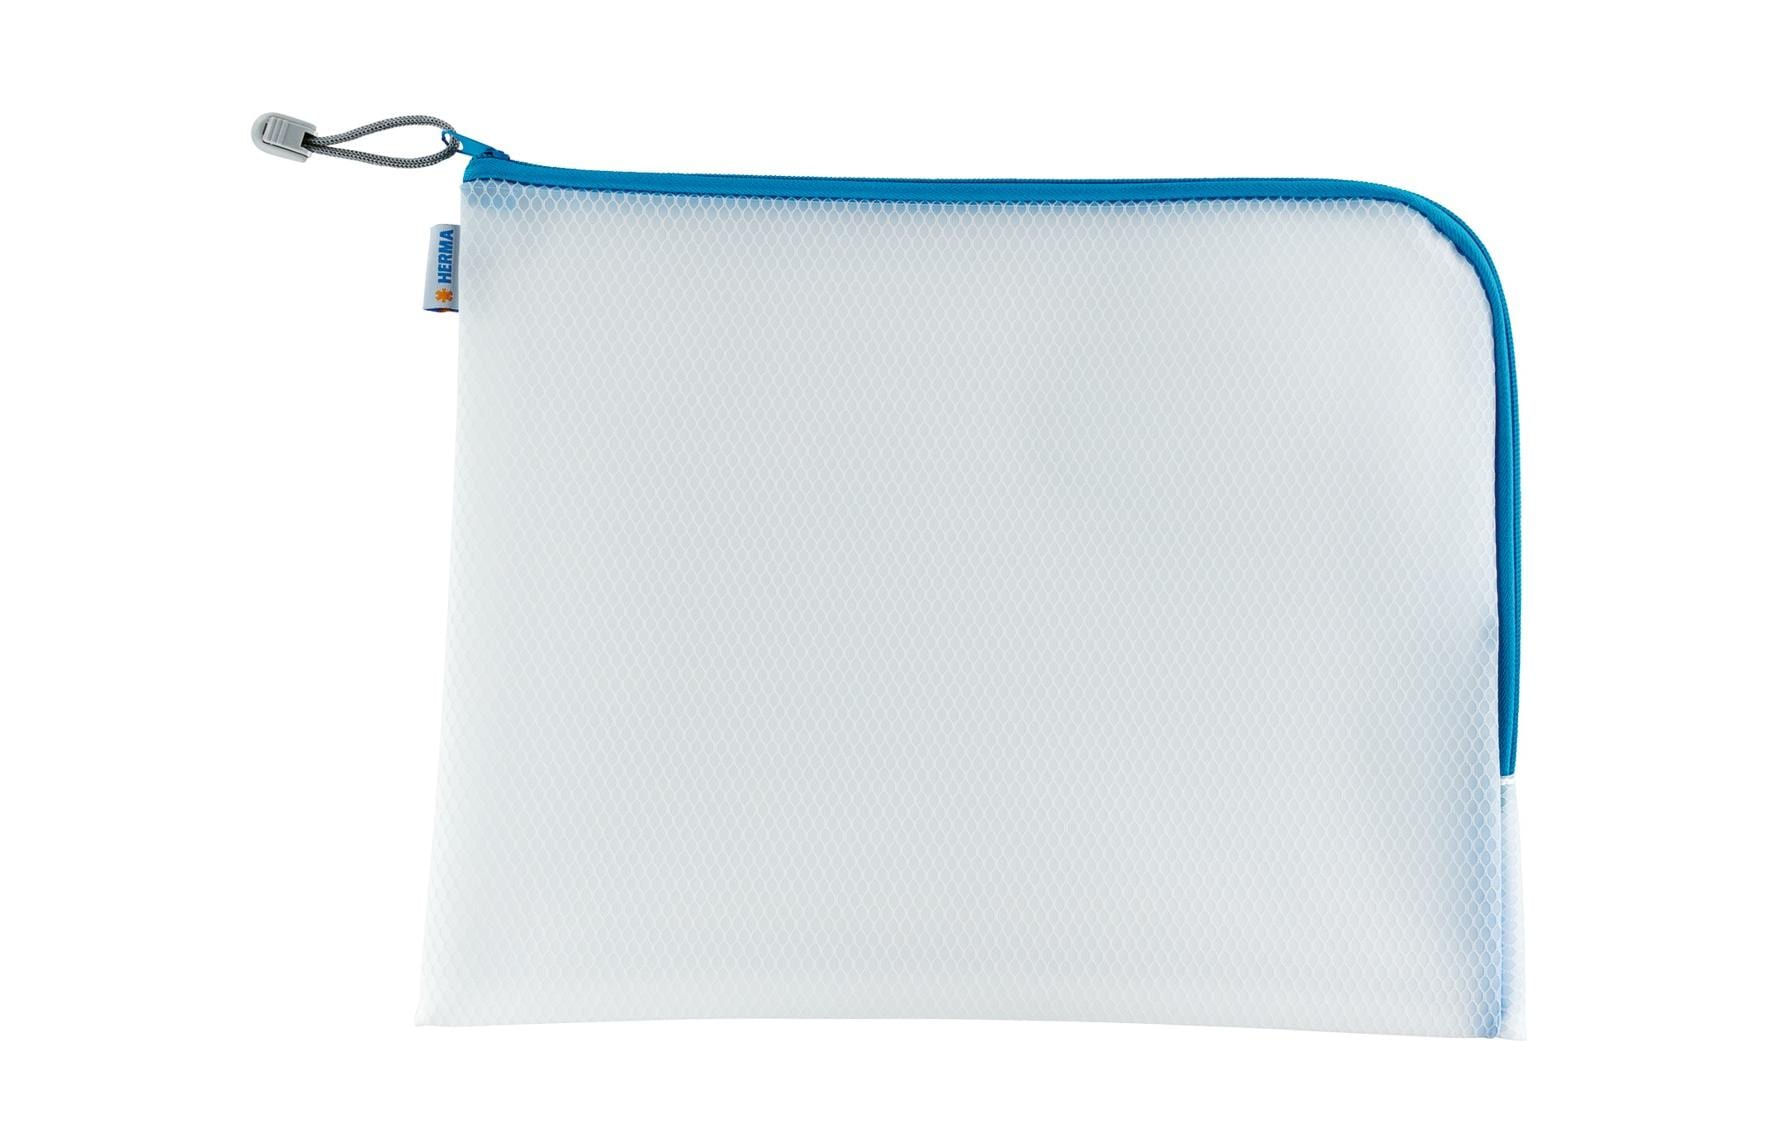 HERMA Etui Mesh Bag 36 x 28 cm, Blau/Weiss